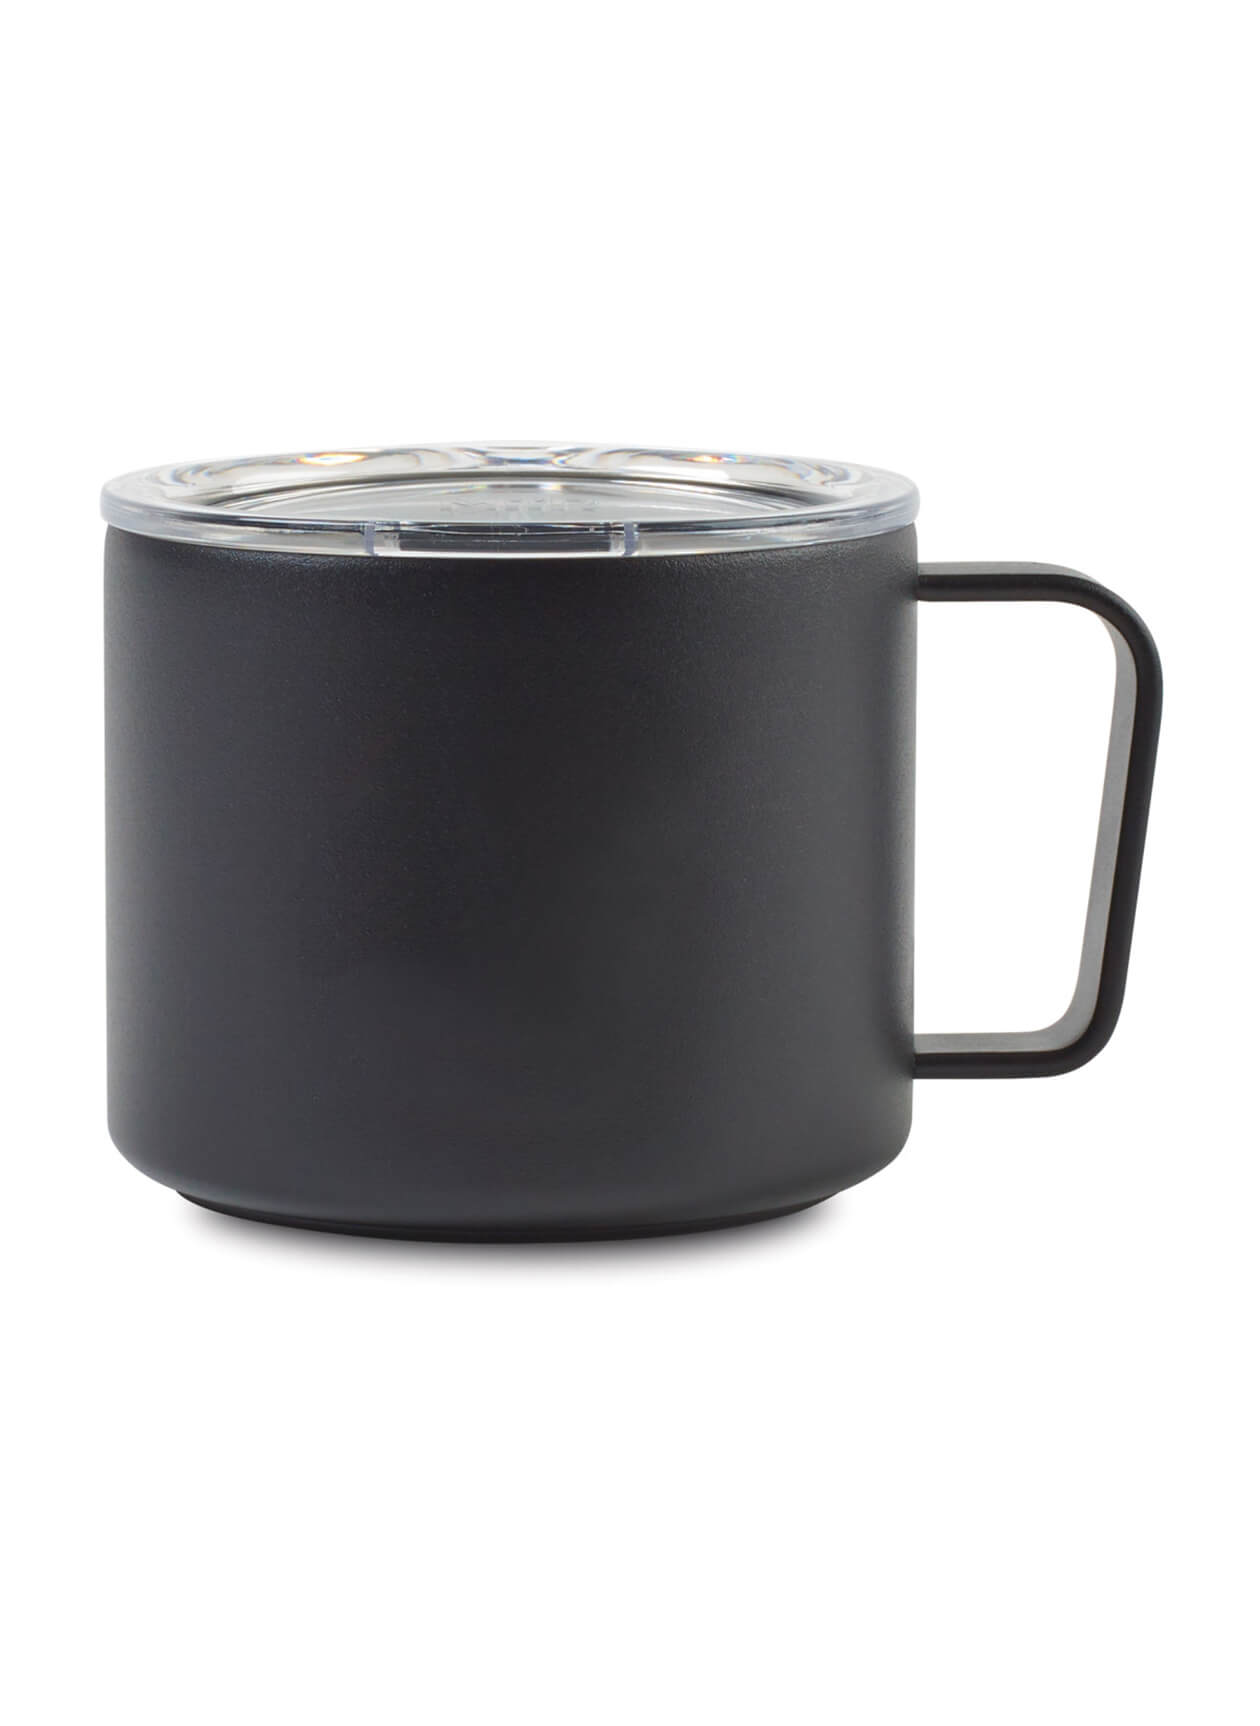 Miir Black Powder Vacuum Insulated Camp Cup - 8 oz